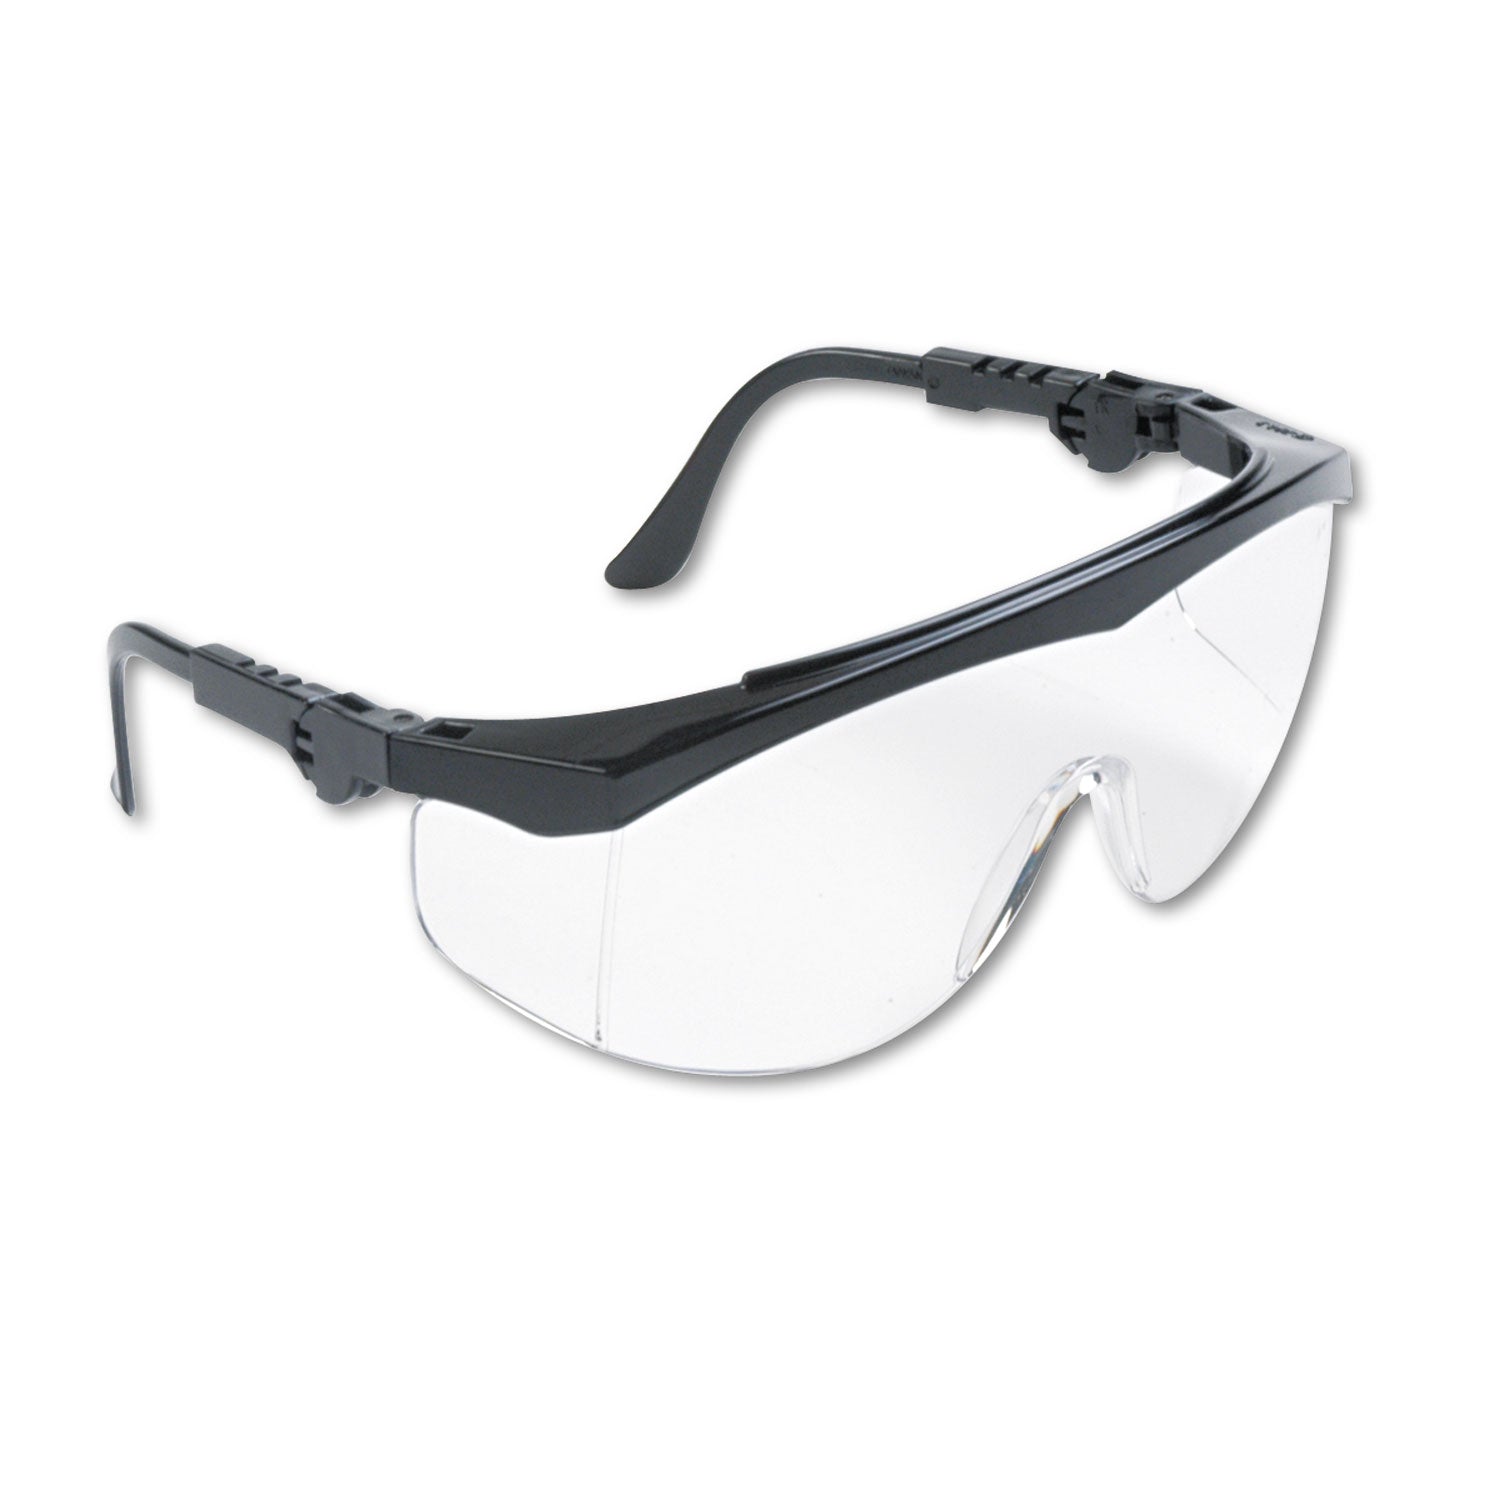 Tomahawk Wraparound Safety Glasses, Black Nylon Frame, Clear Lens, 12/Box - 